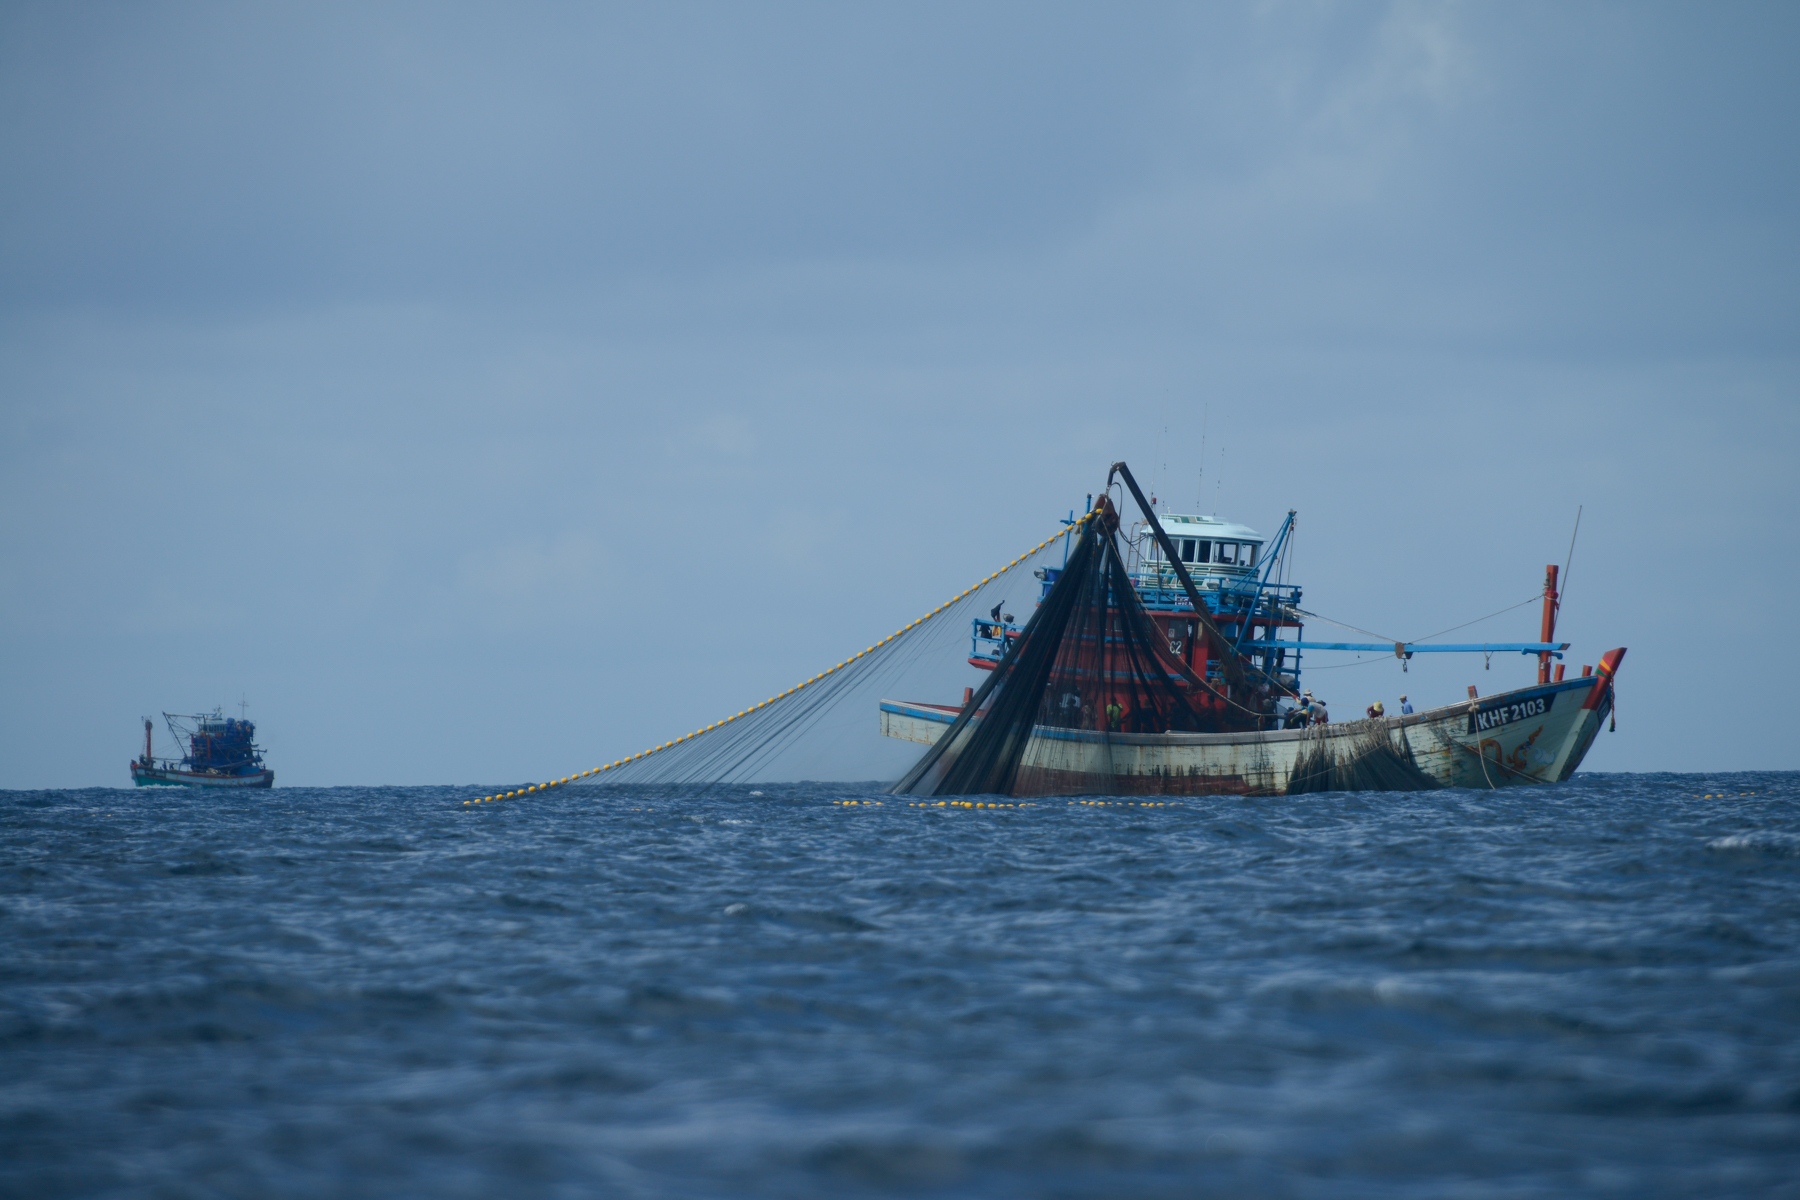 Lipe Island - Large fishing boats are trawling the sea near the island...